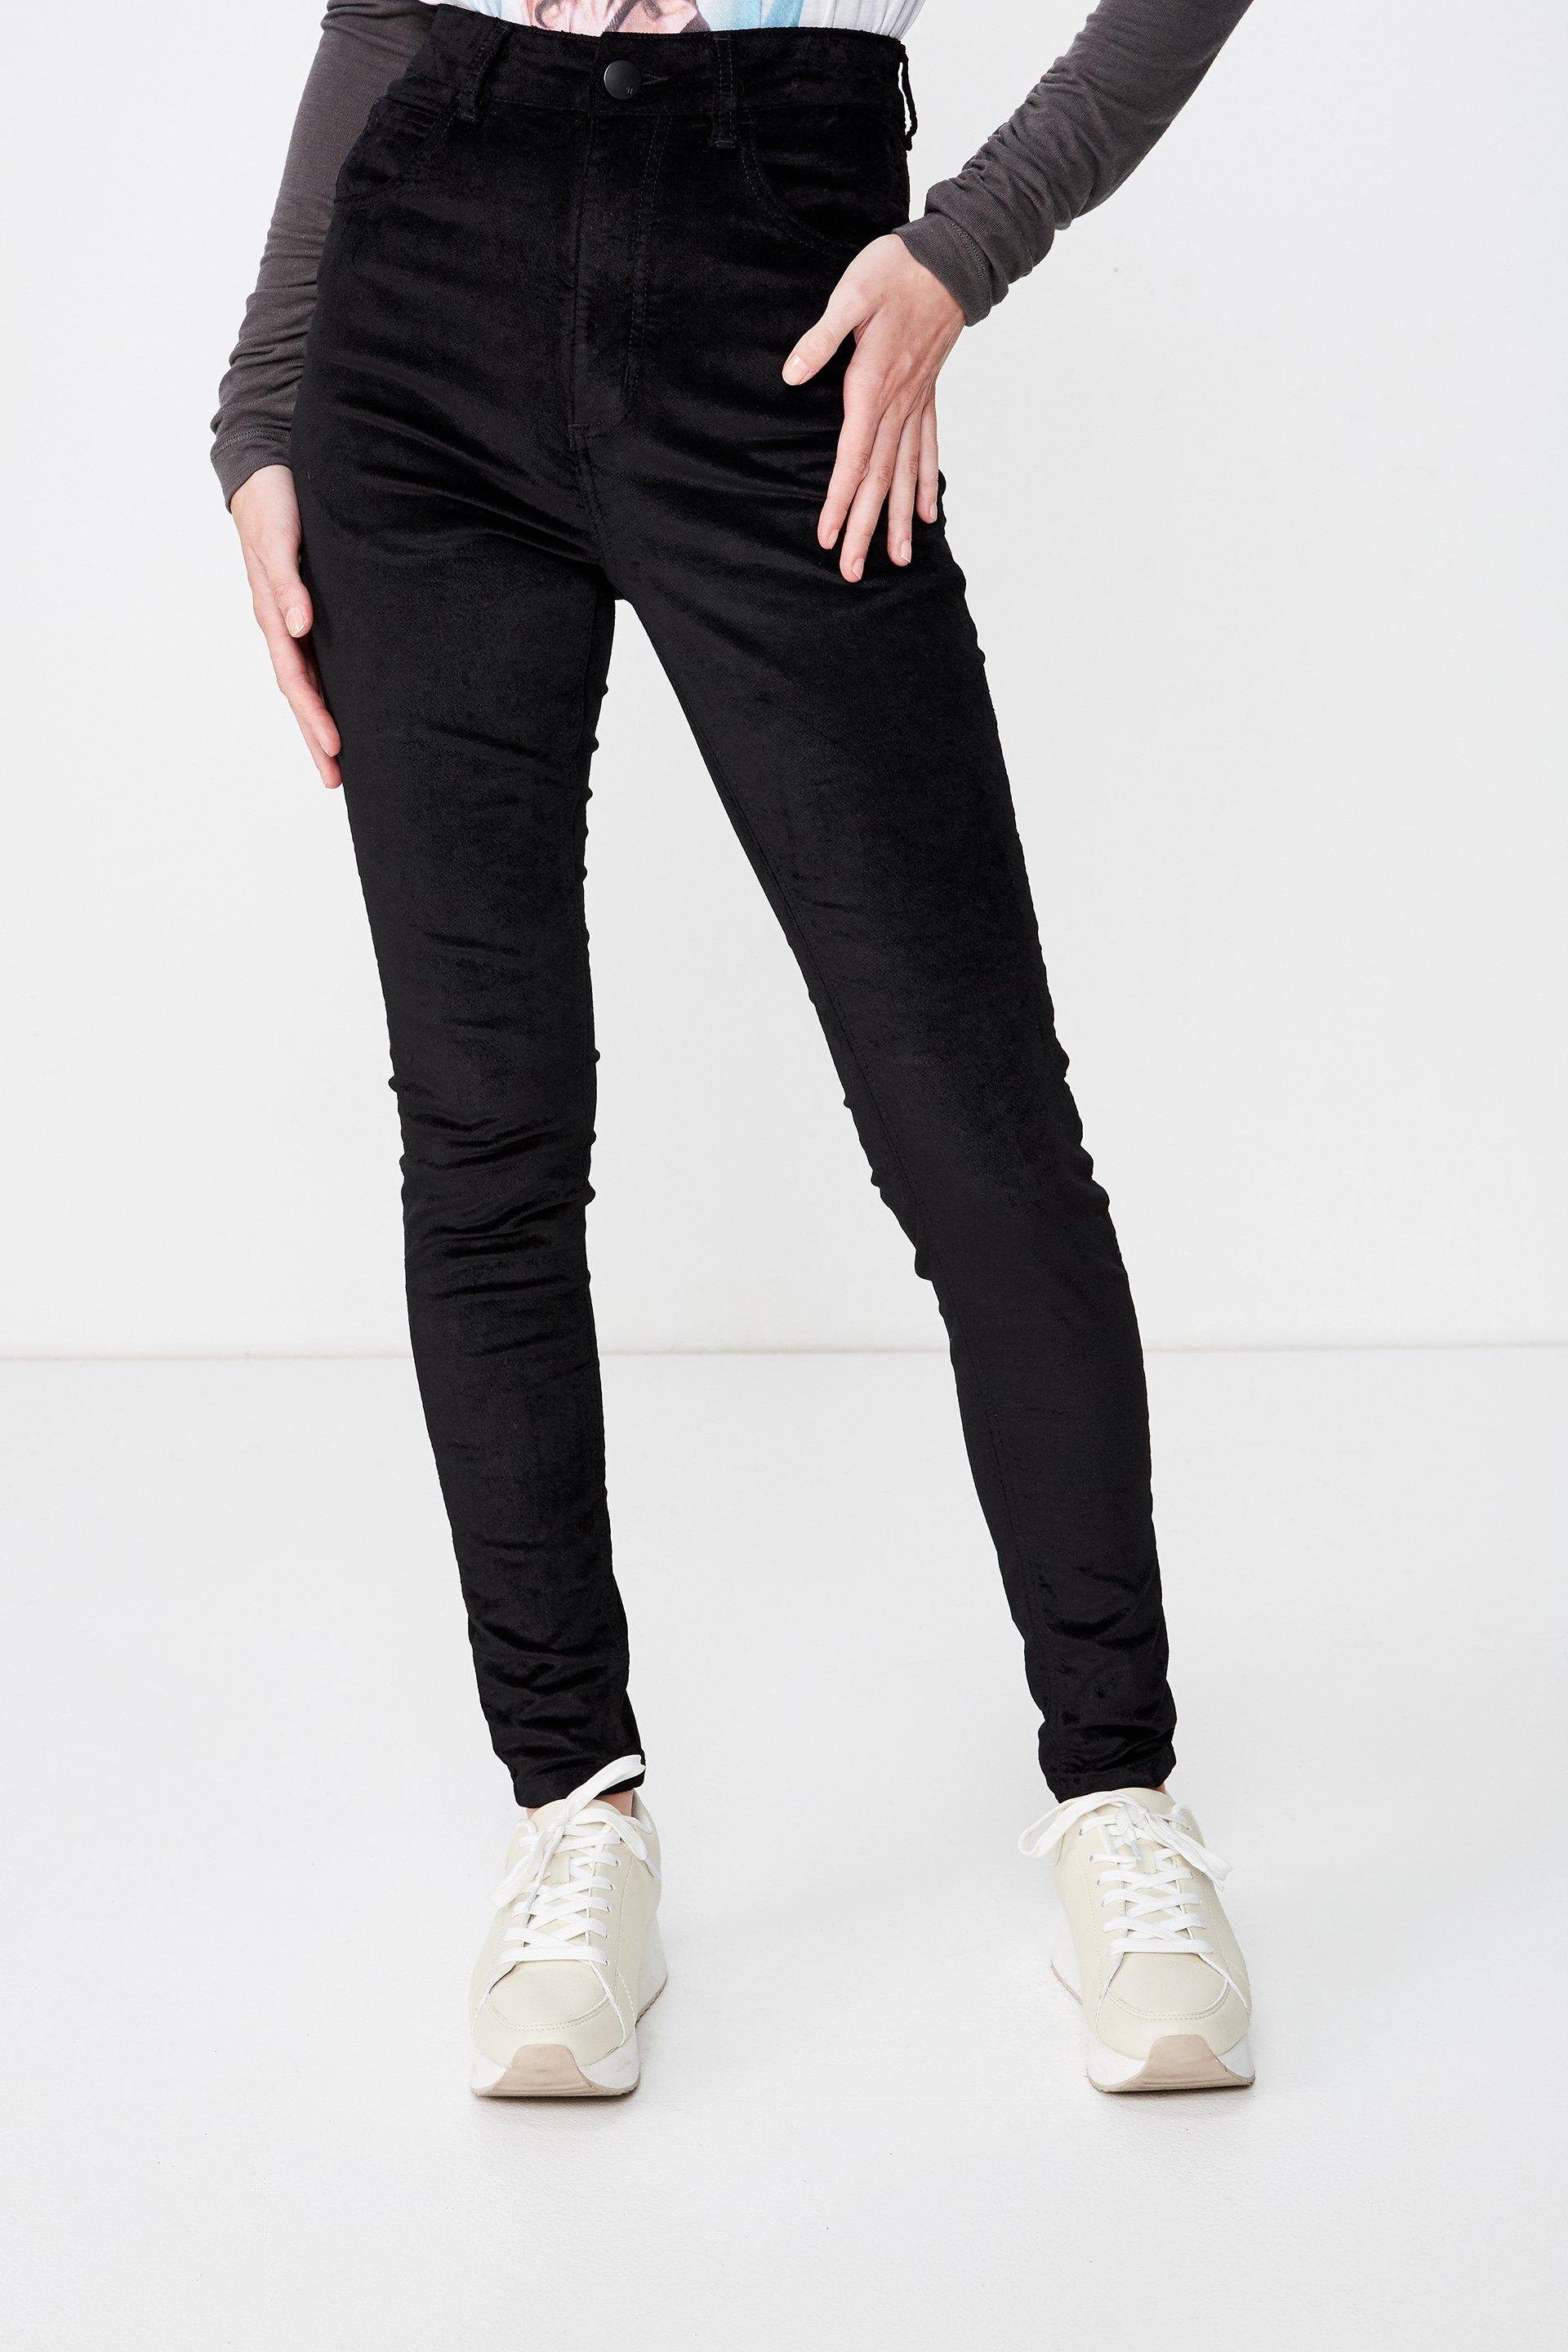 High rise skinny jeans - velvet black Cotton On Jeans | Superbalist.com